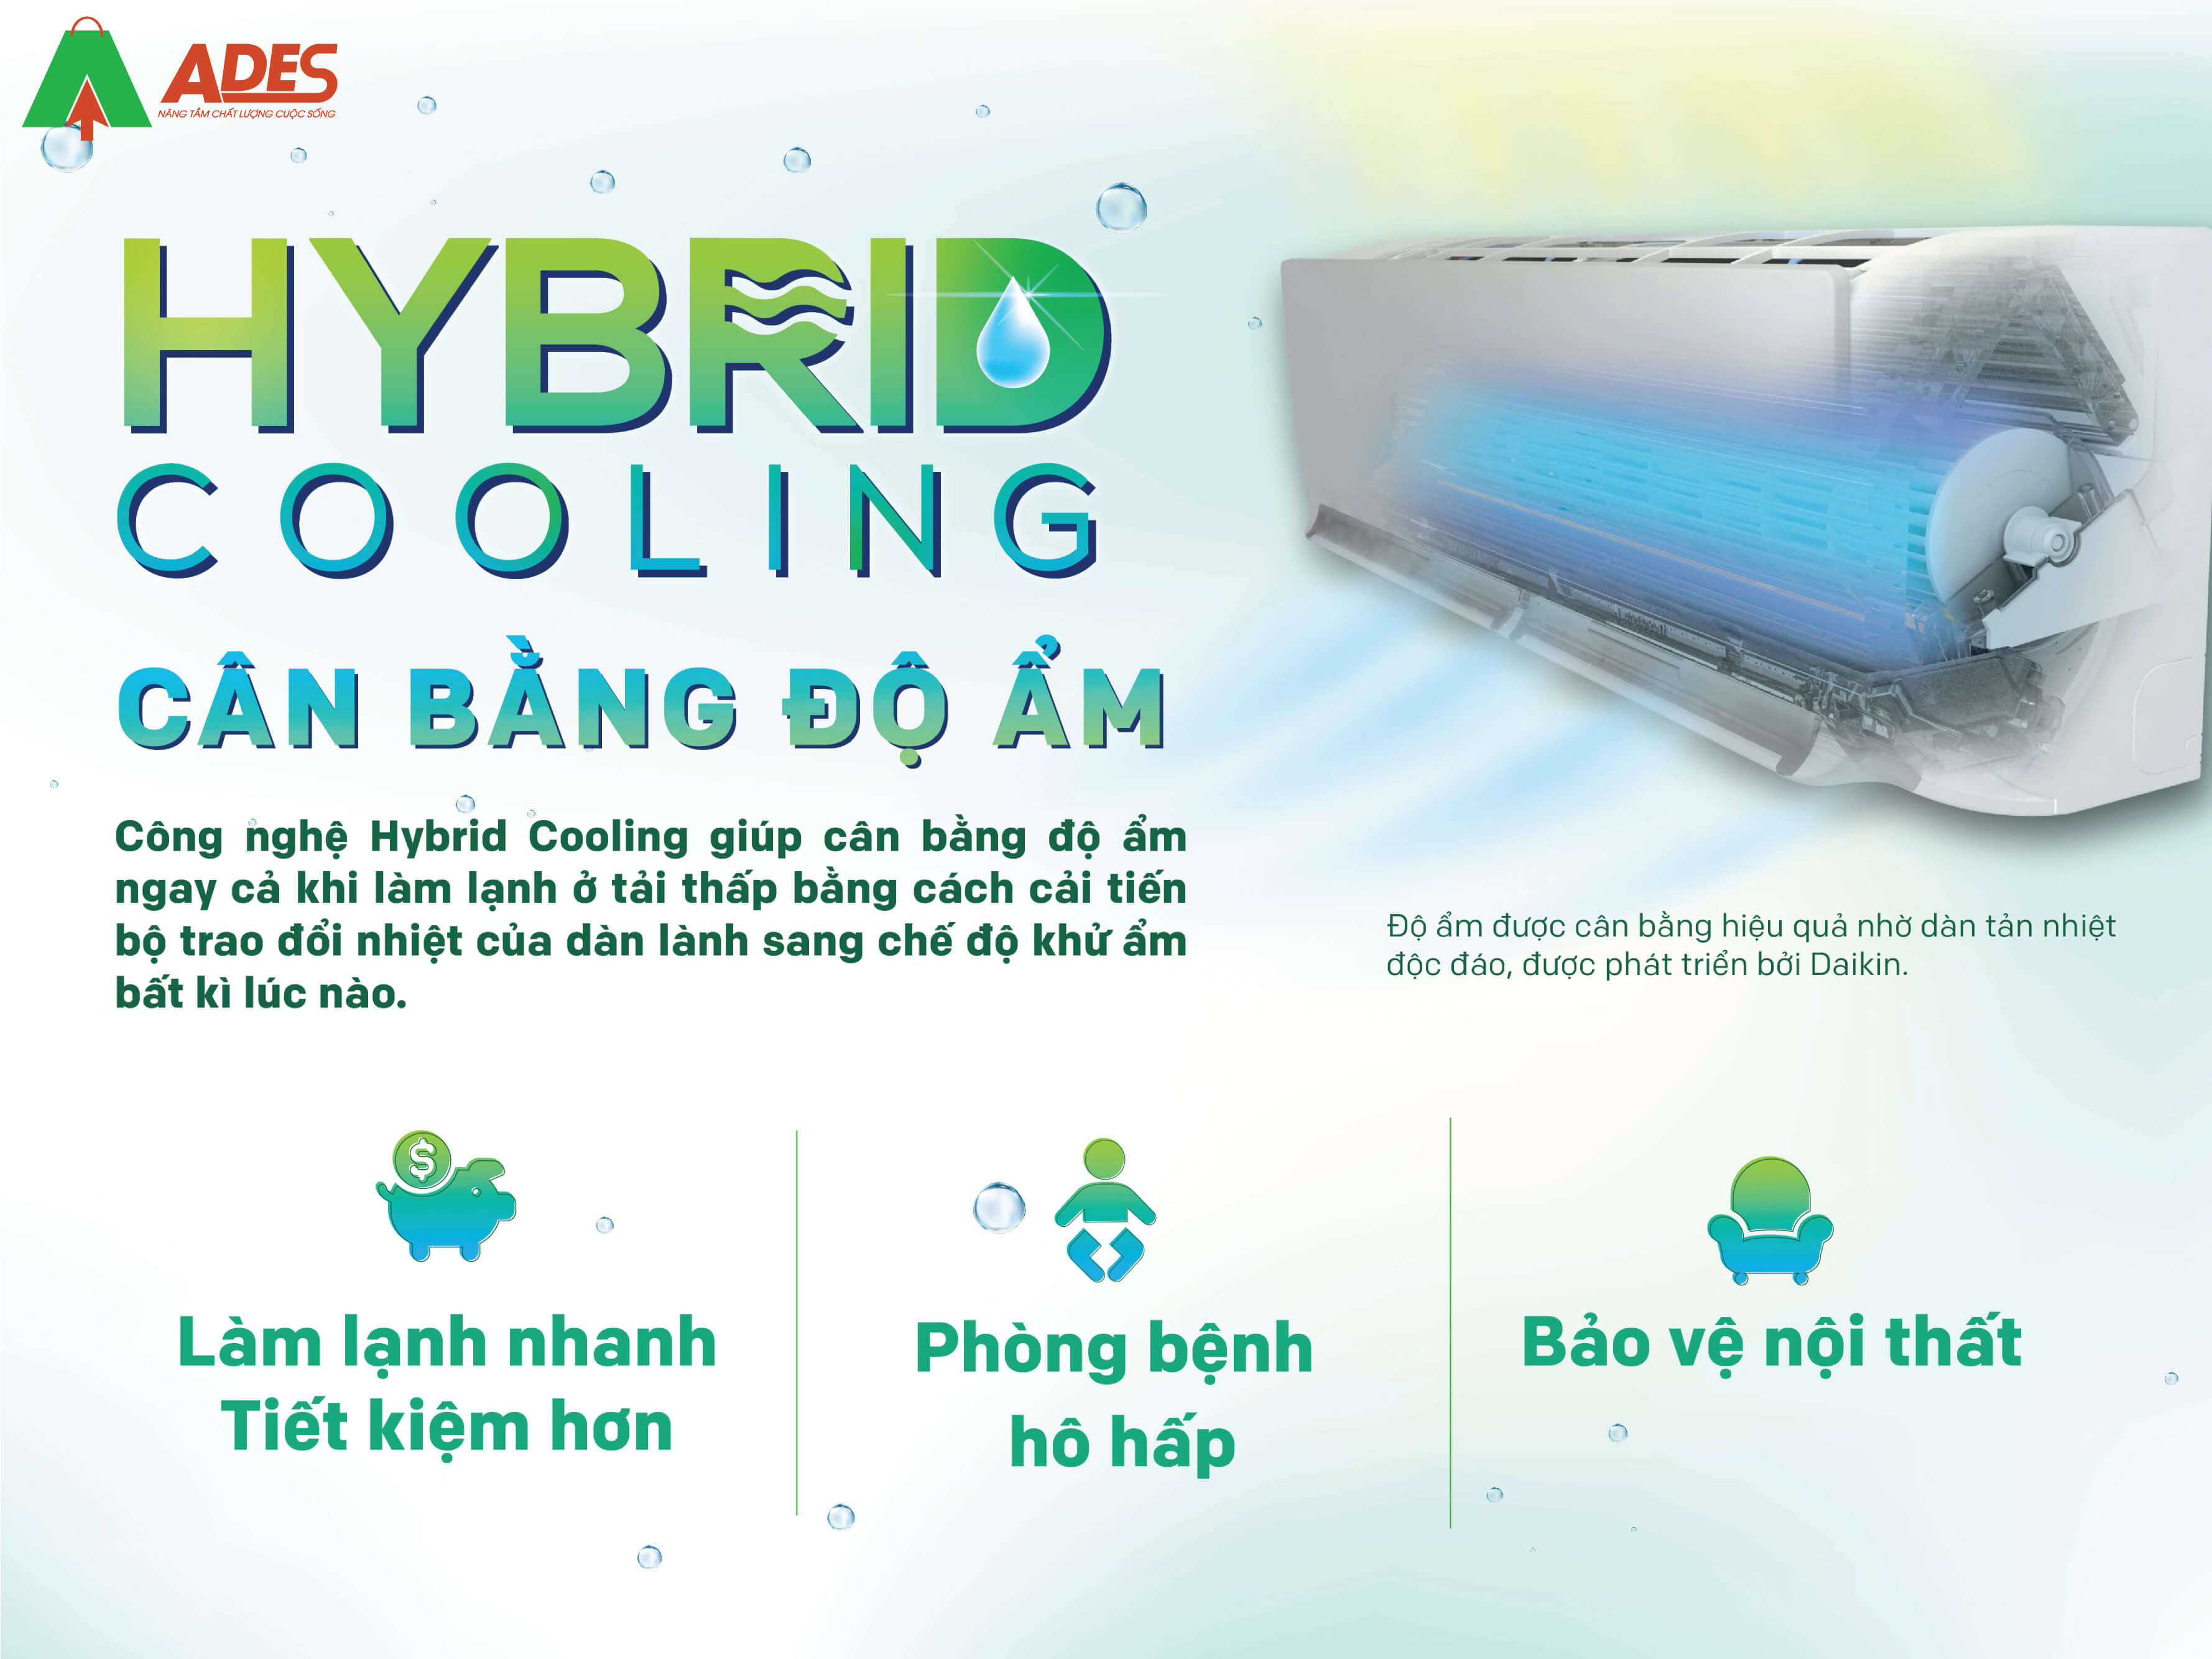 Can bang do am khong khi voi Hybrid Cooling